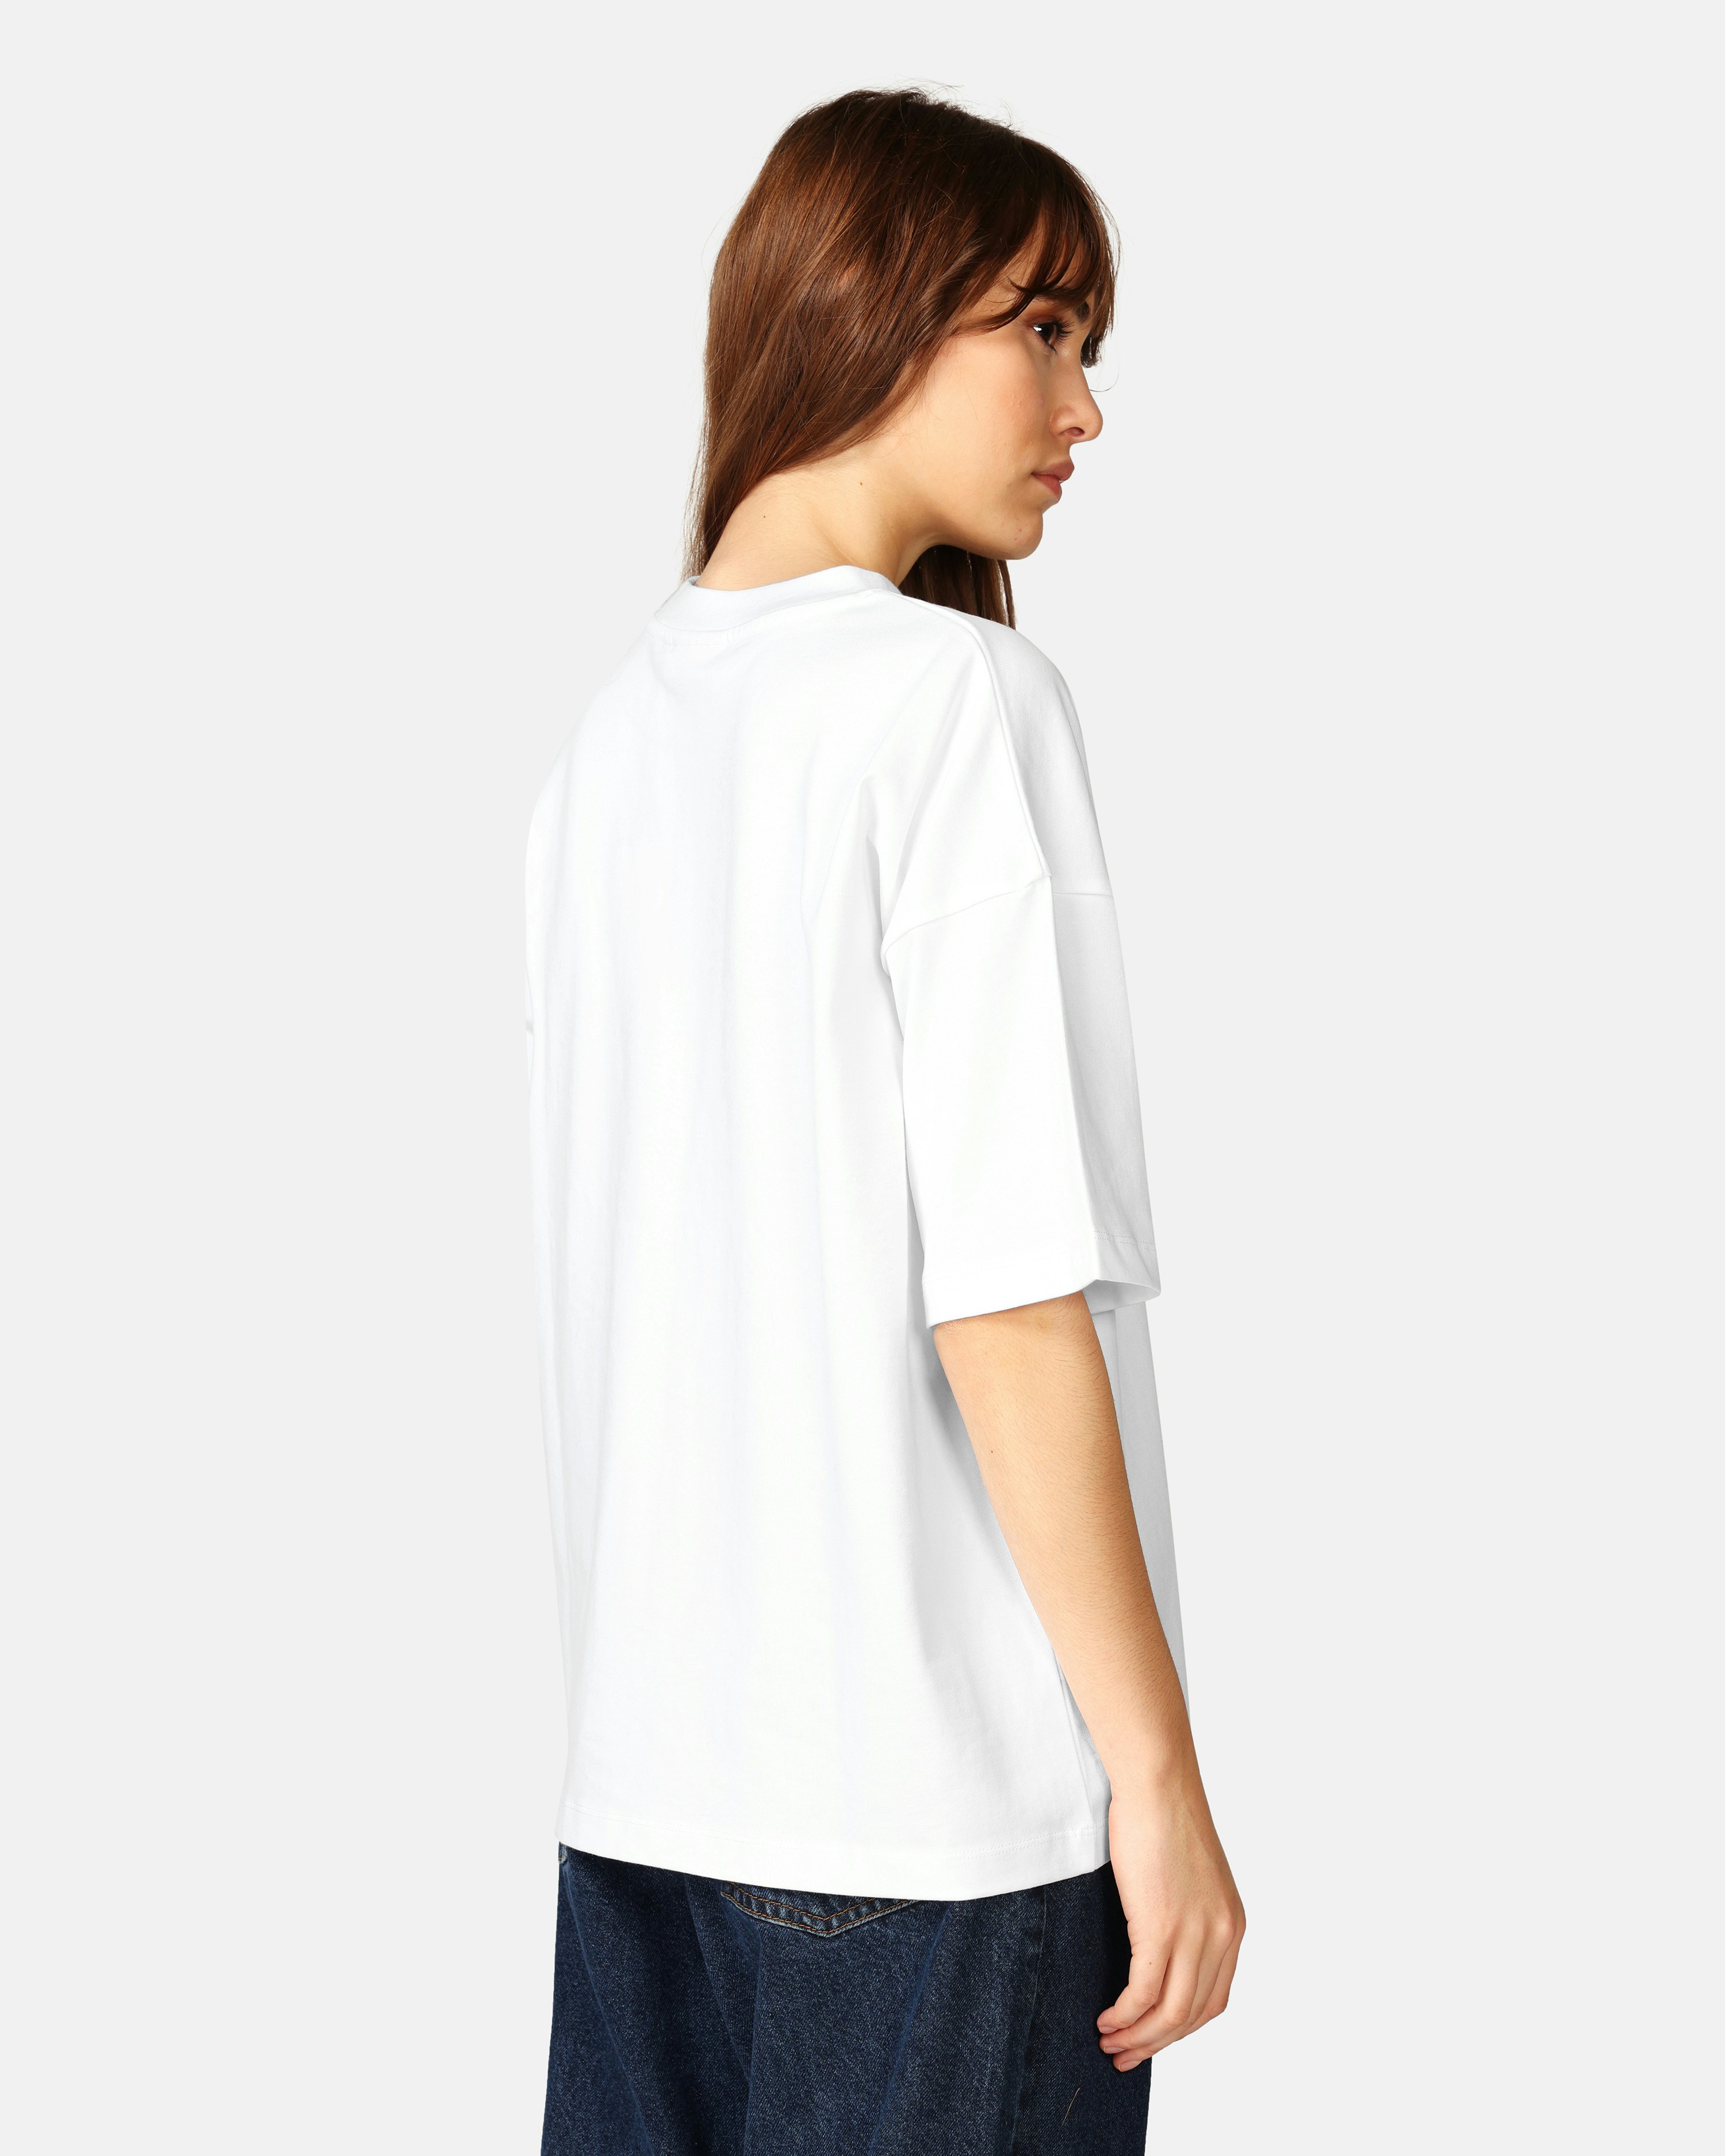 BEYOND MEDALS Culture | White T-Shirt Junkyard Unisex 